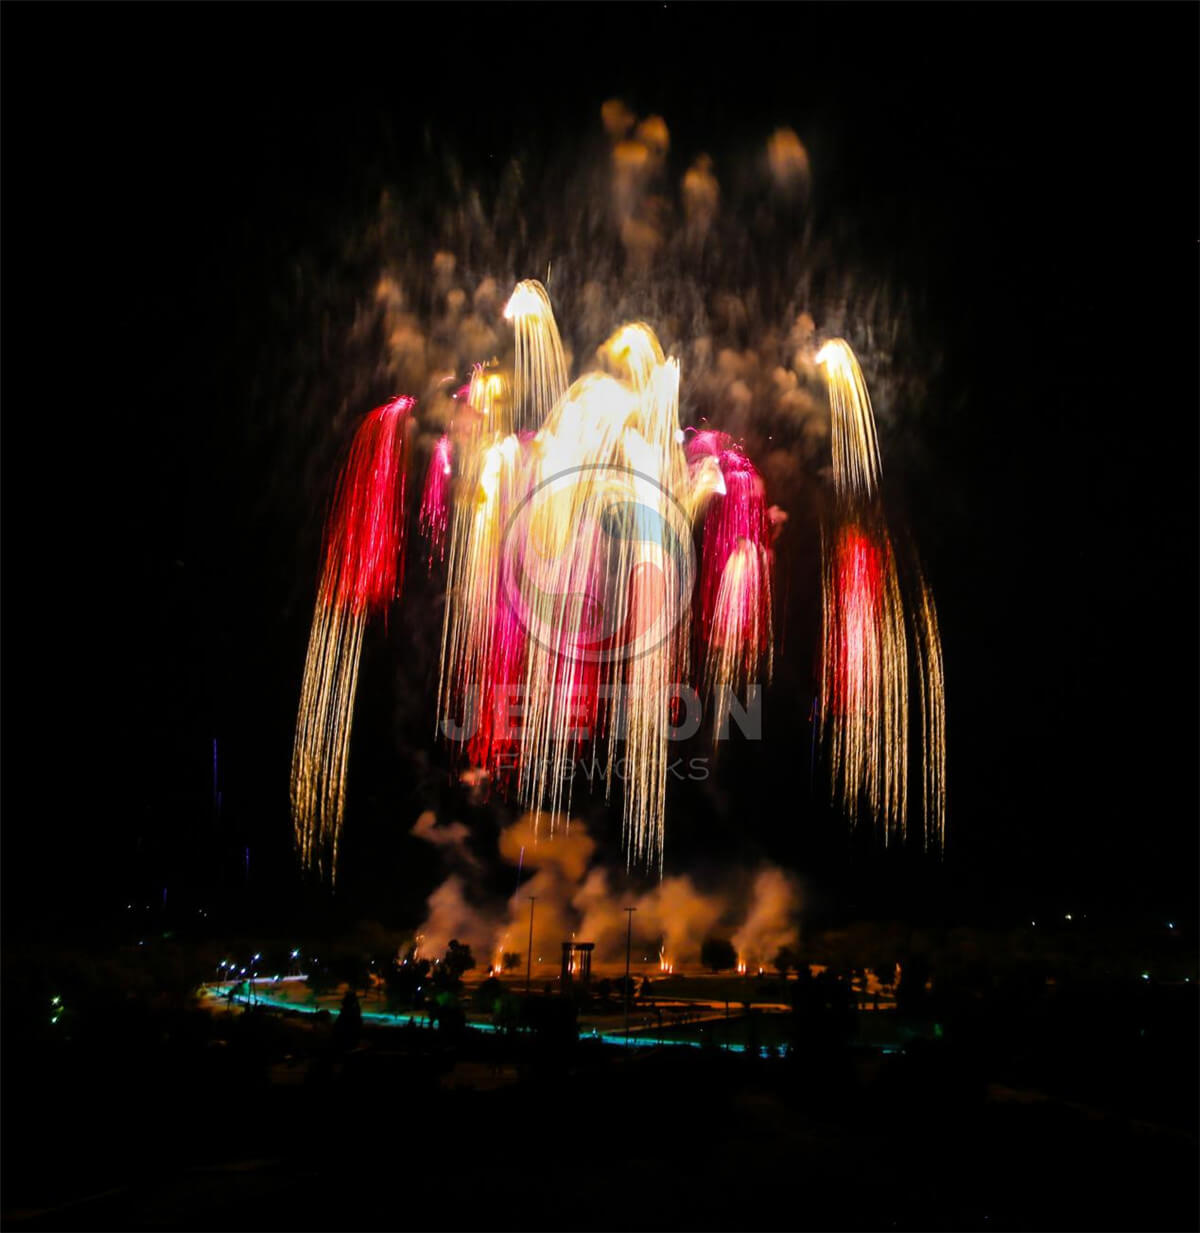 The 28th Anniversary Celebration Fireworks Show of Uzbekistan